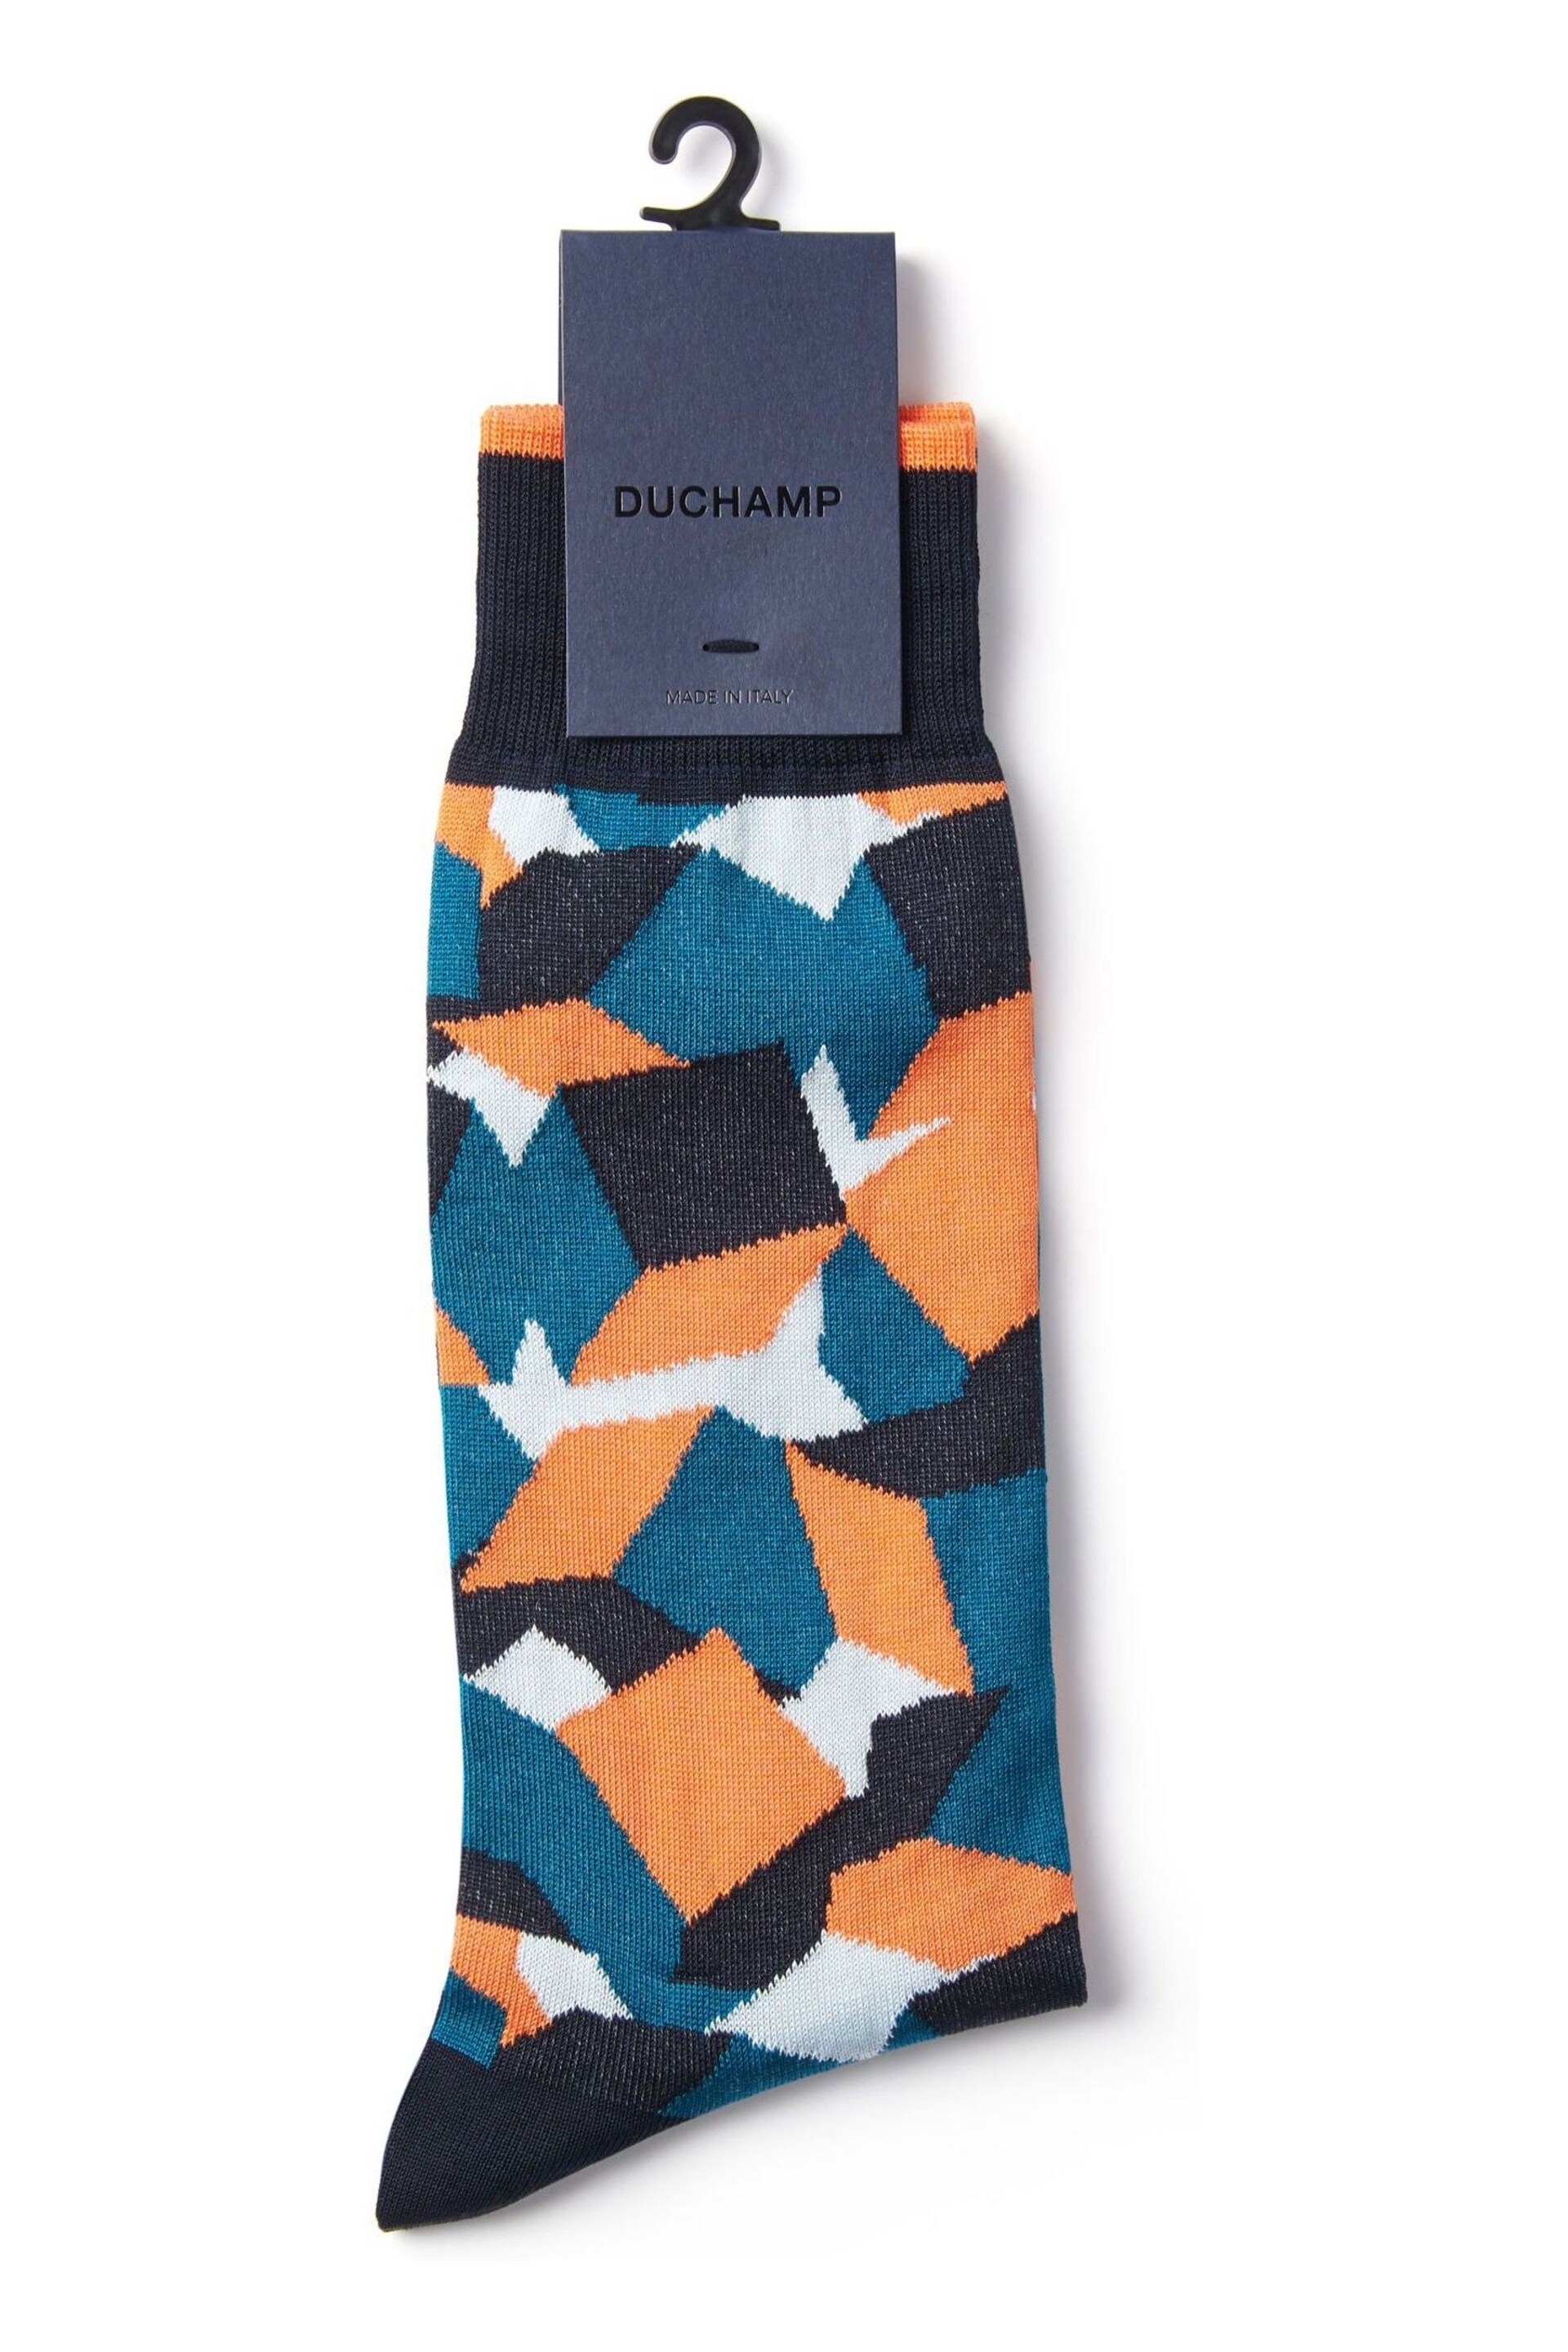 Duchamp Mens Blue 2 Pairs Gift Set Cube Socks - Image 3 of 5